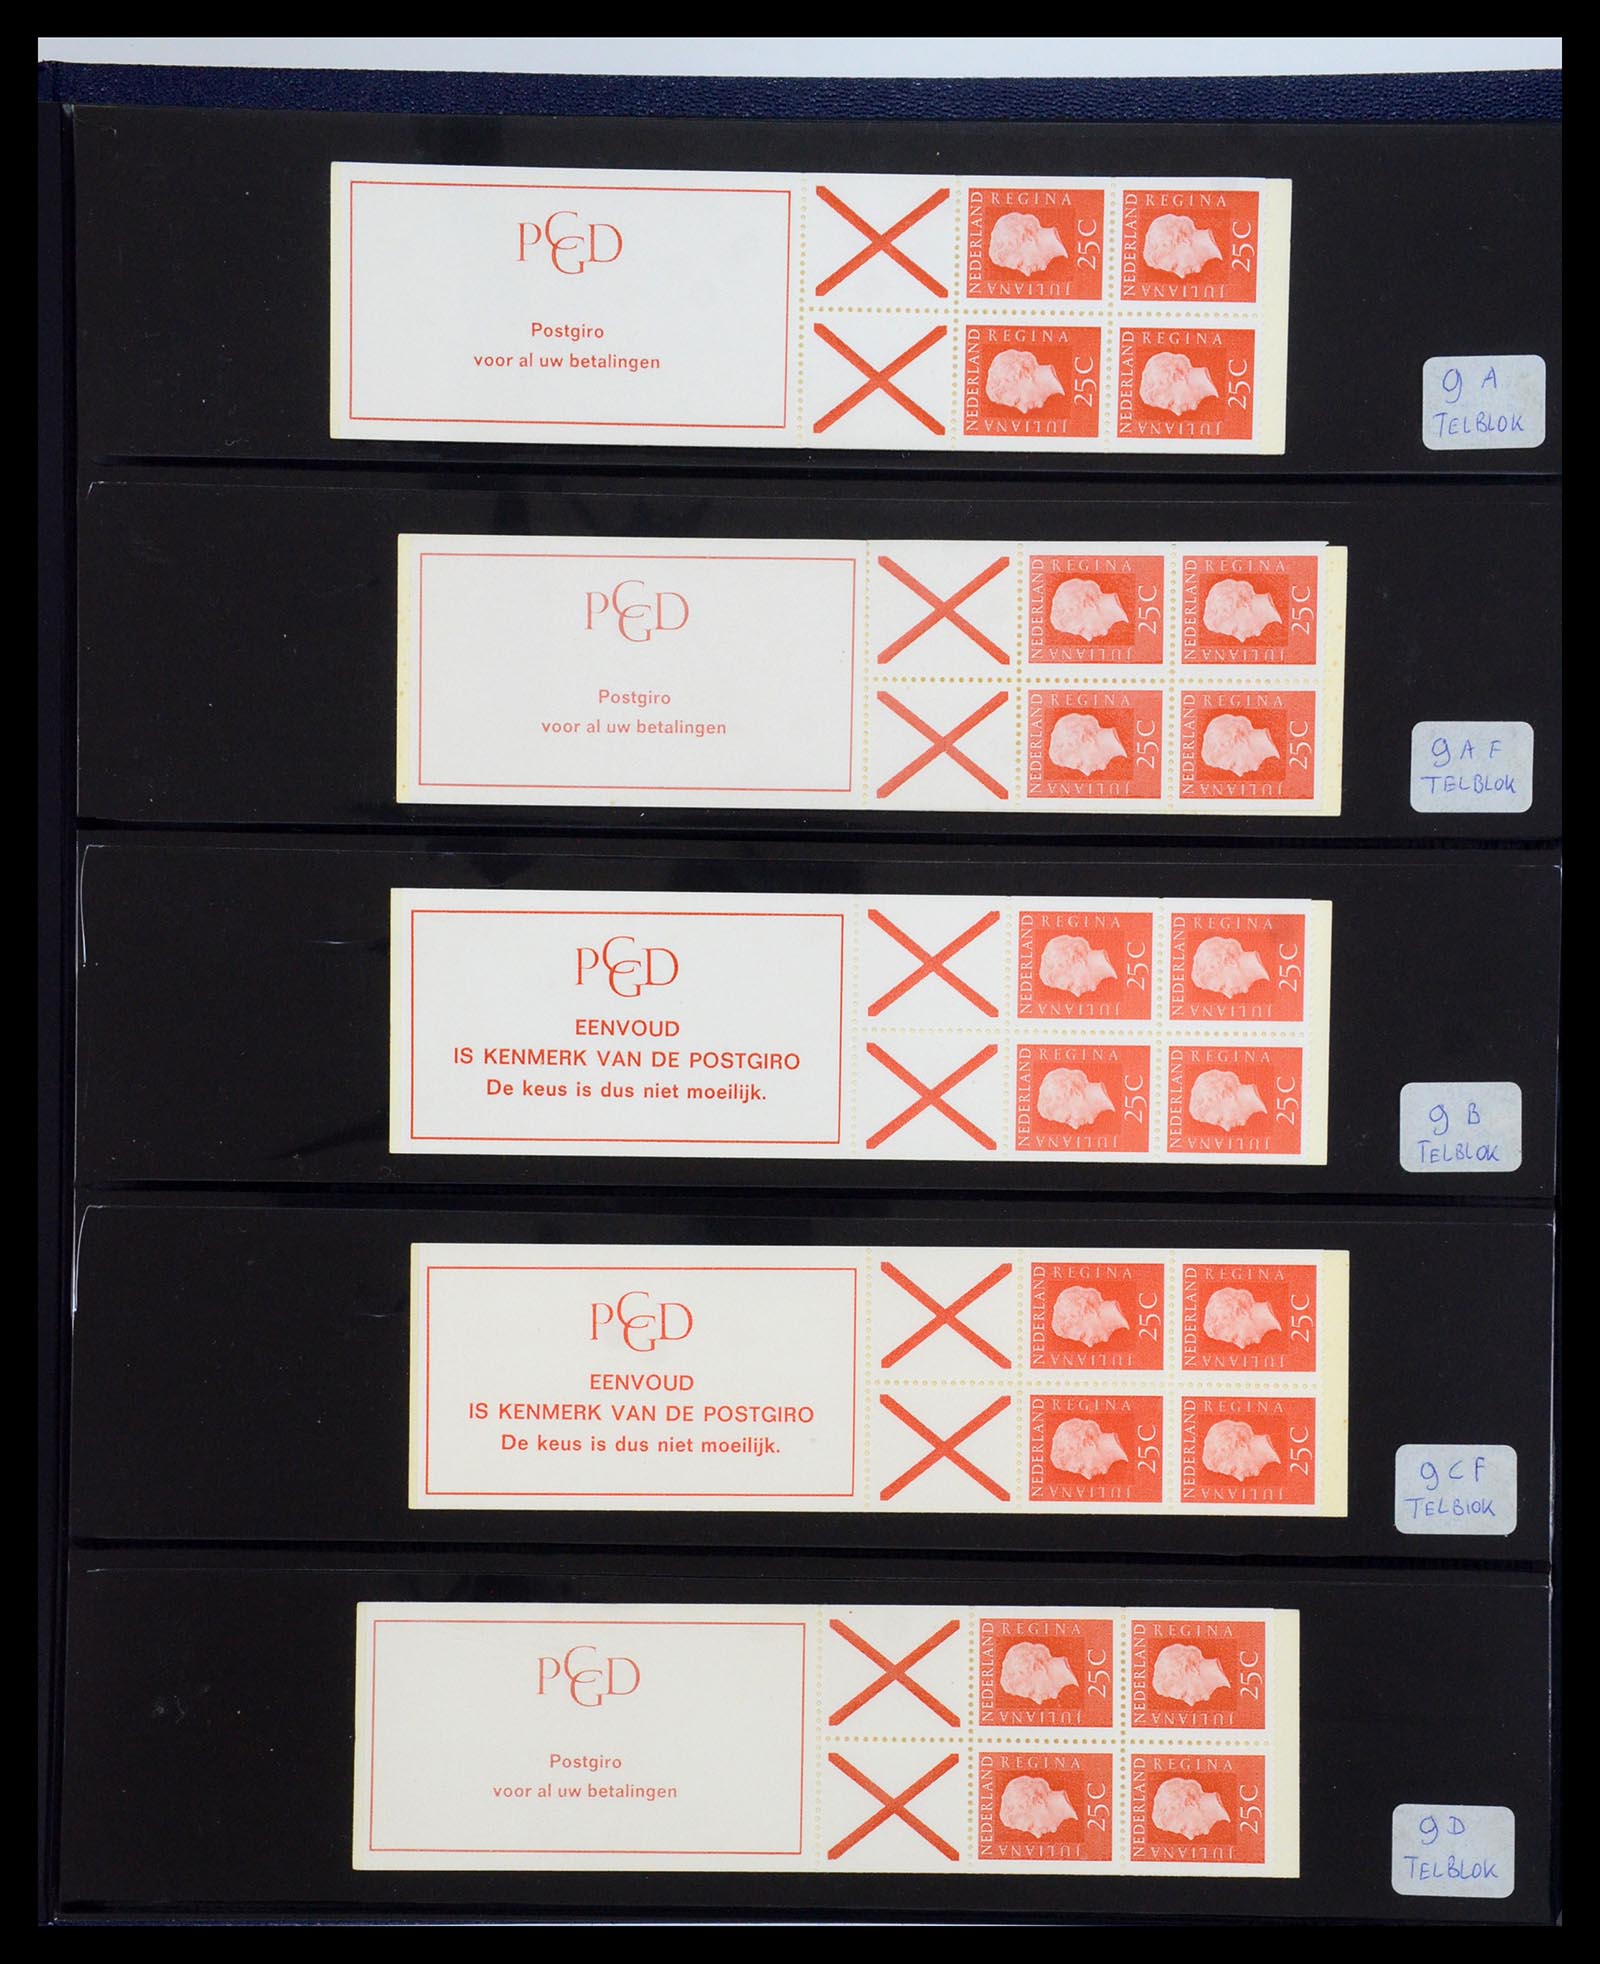 35821 023 - Stamp Collection 35821 Netherlands stamp booklets 1964-1983.